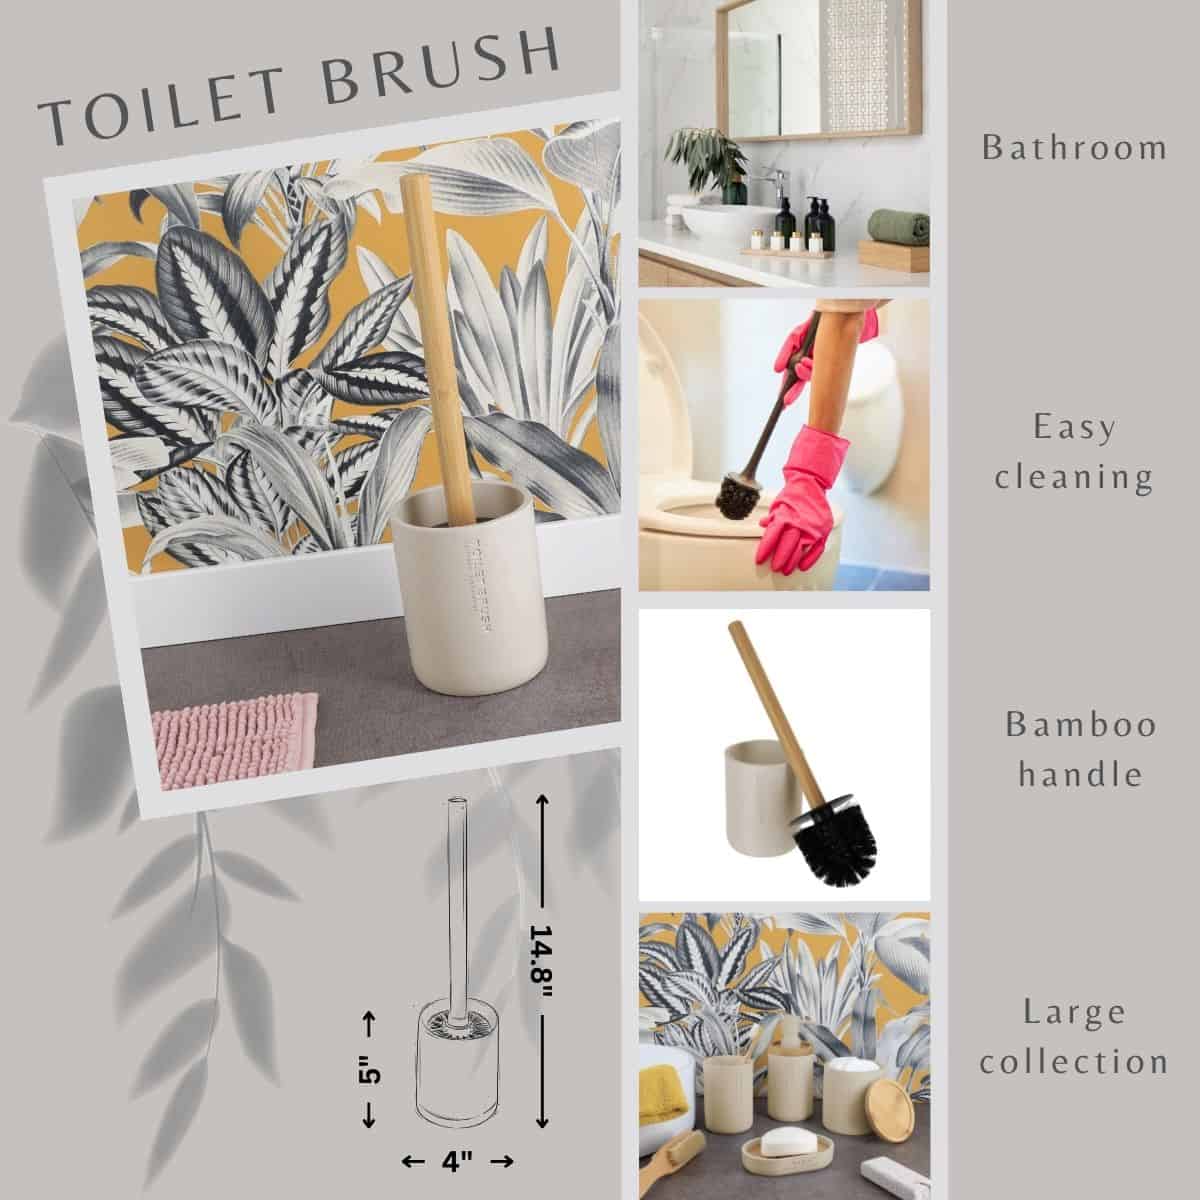 Versatile wooden cream toilet brush and holder set for bathroom restroom easy cleaning